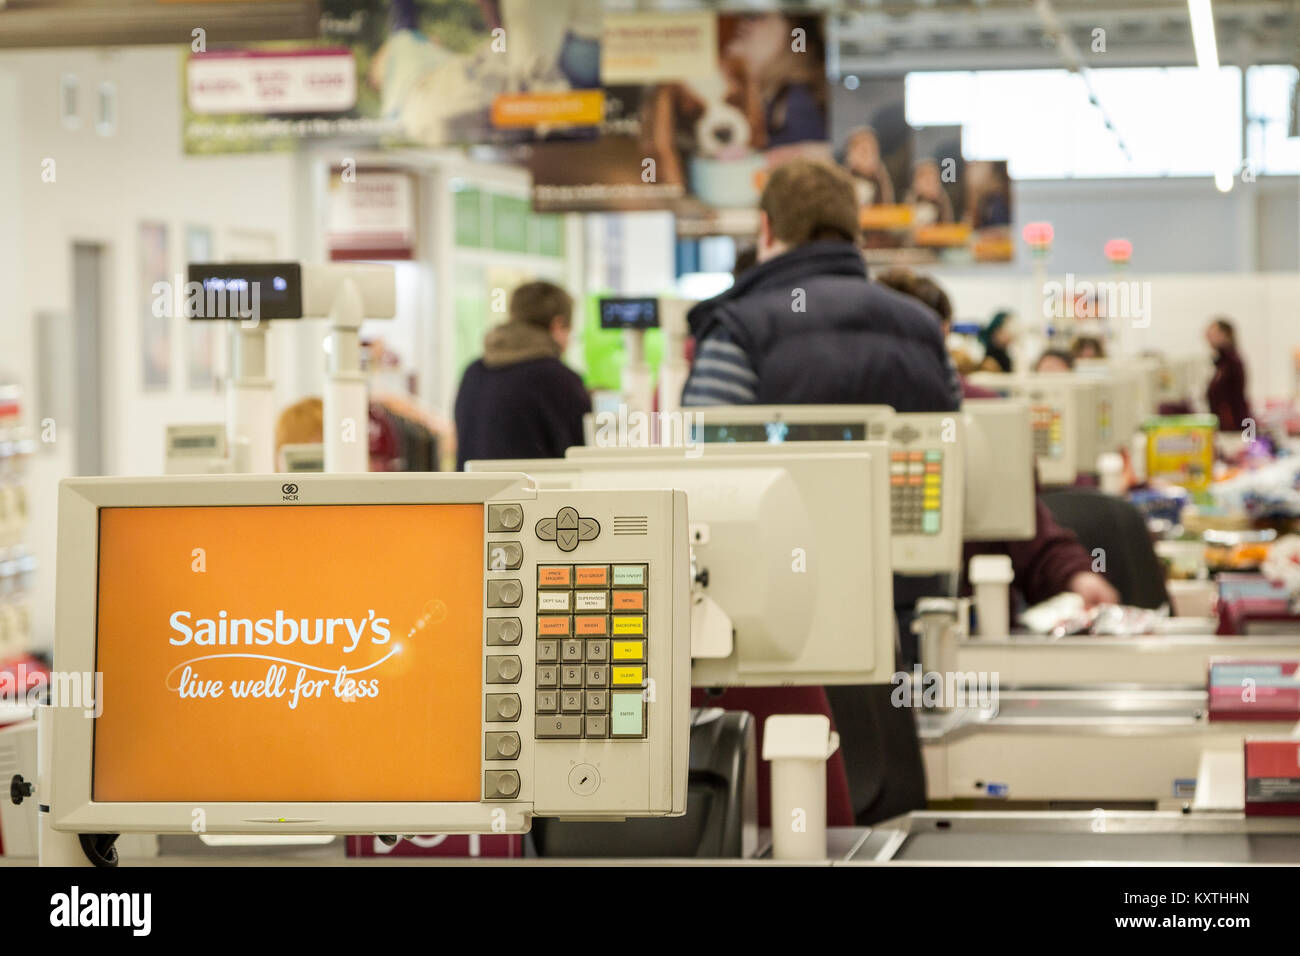 New Sainsbury's superstore, Thanet, Kent UK Stock Photo